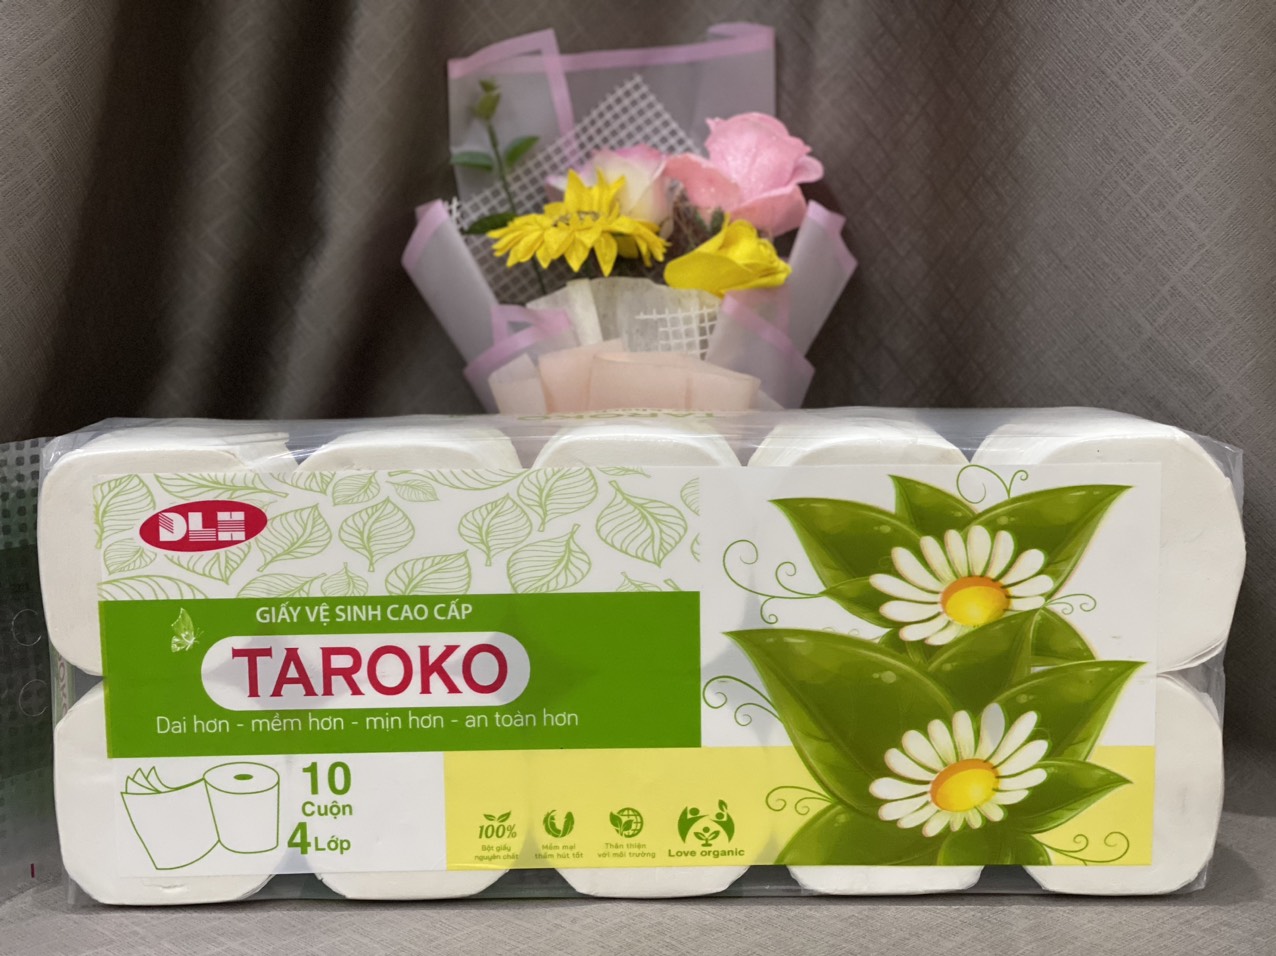 Giấy vệ sinh TAROKO 10 cuộn